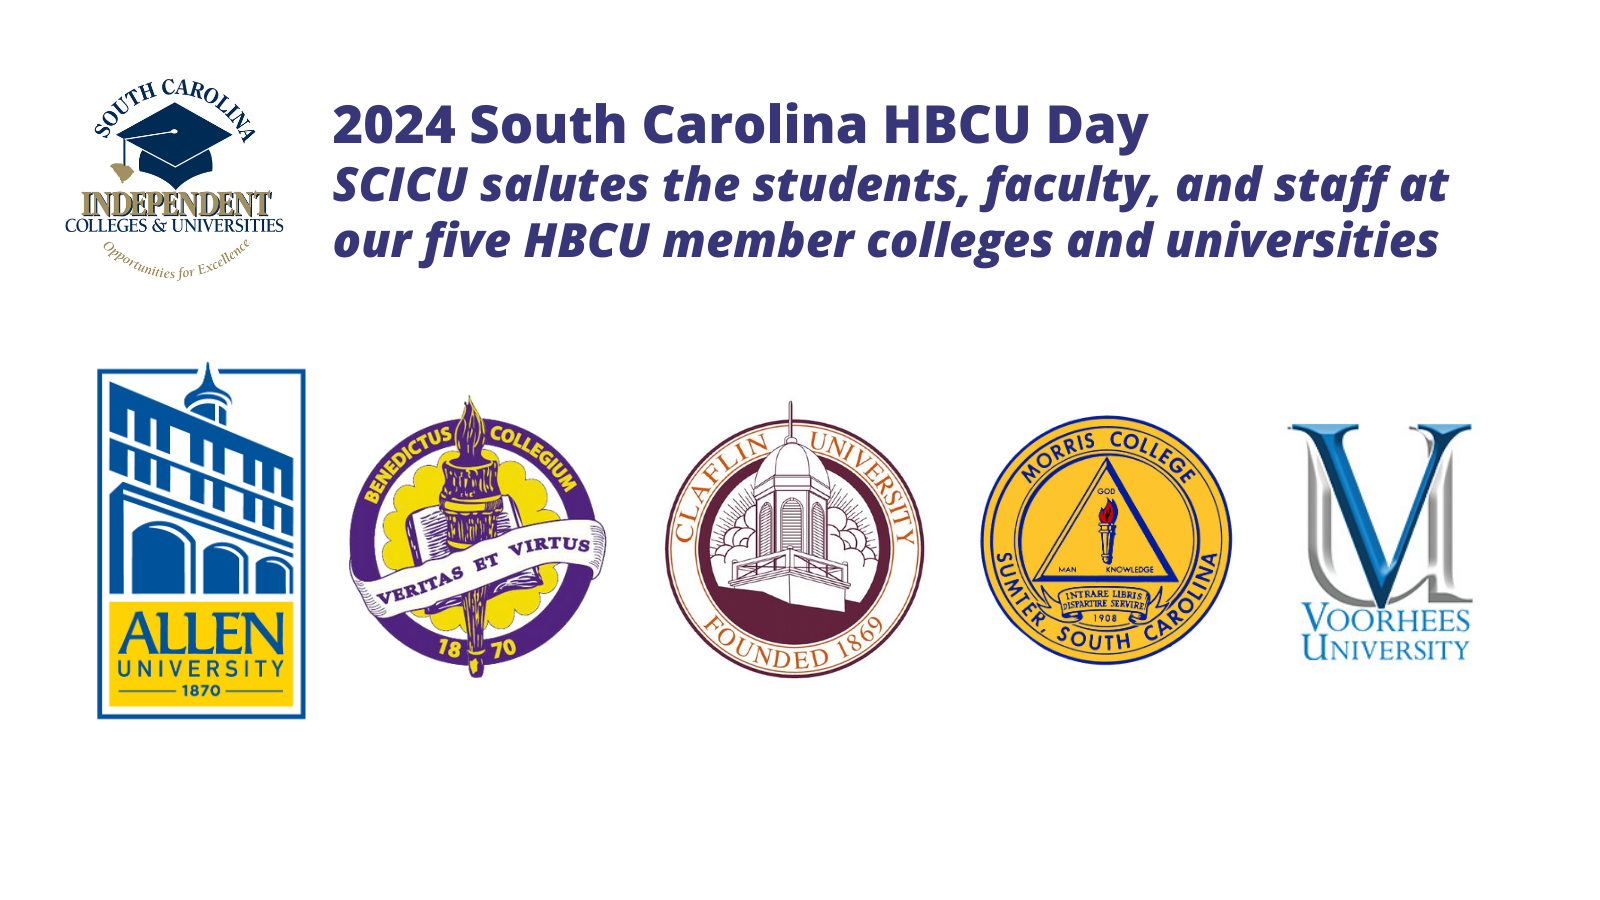 SCICU celebrates its 5 member HBCUs on S.C. HBCU Day 2024 - Allen University, Benedict College, Claflin University, Morris College, and Voorhees University.